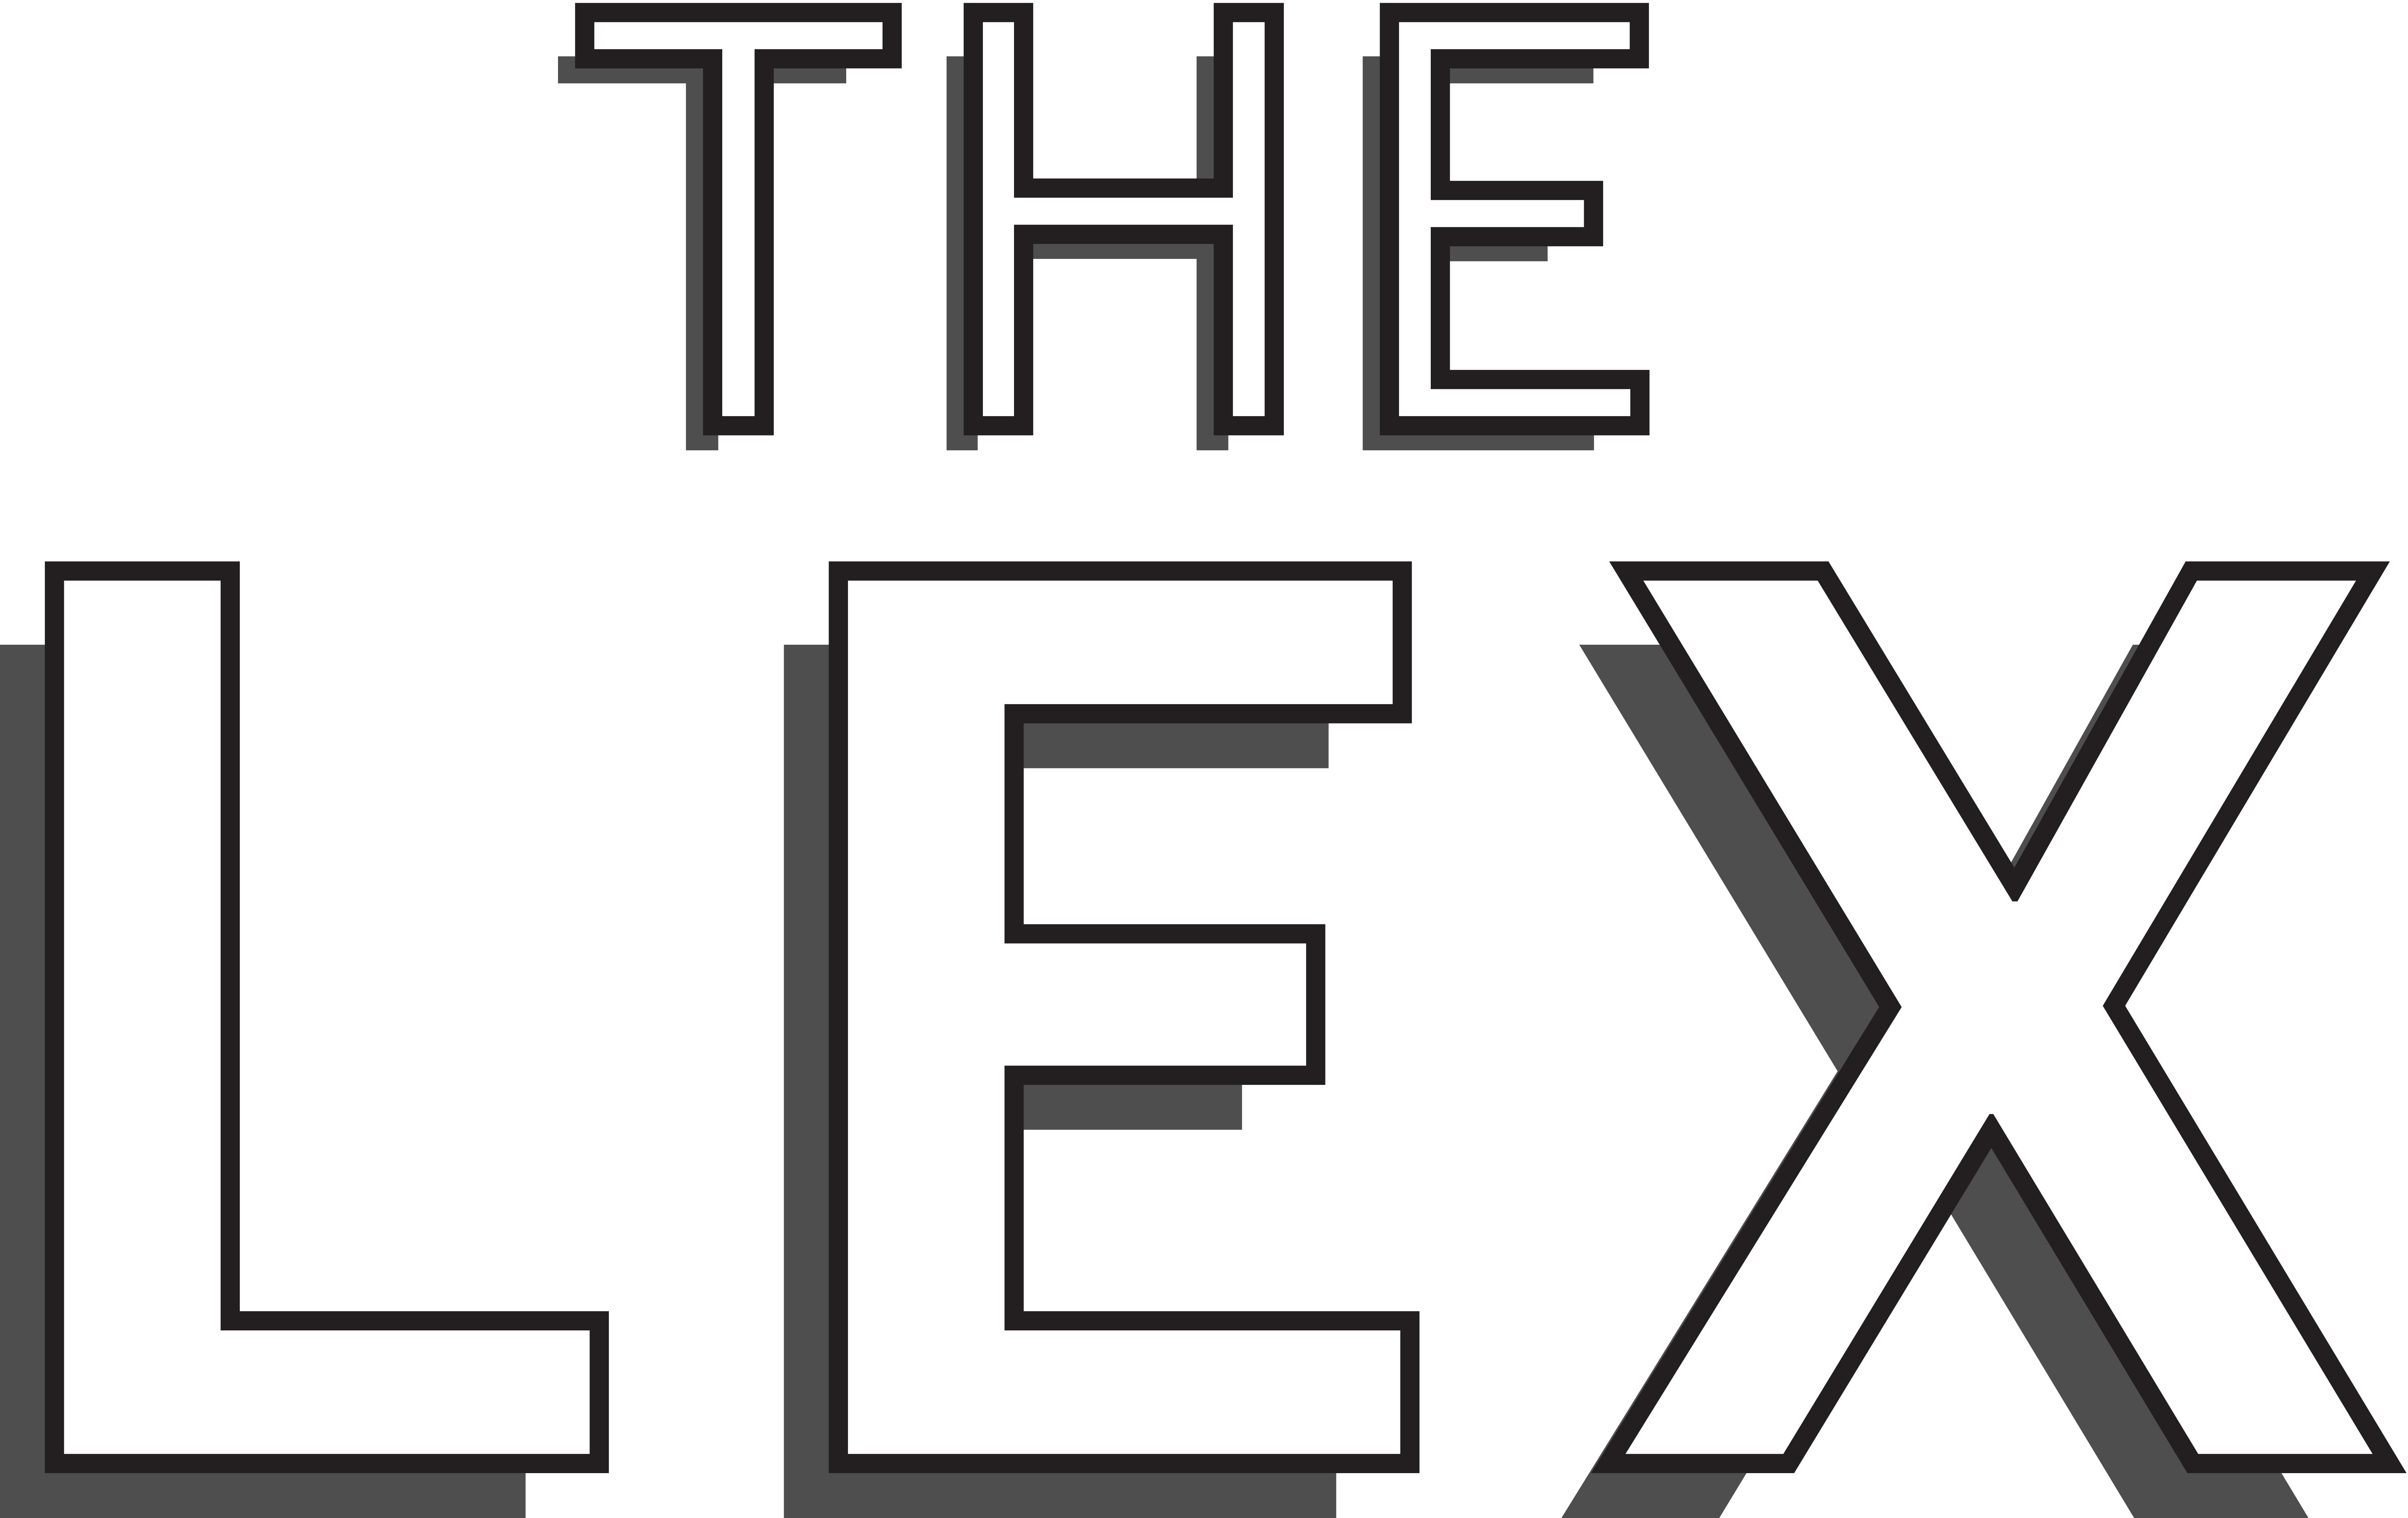 The Lex logo